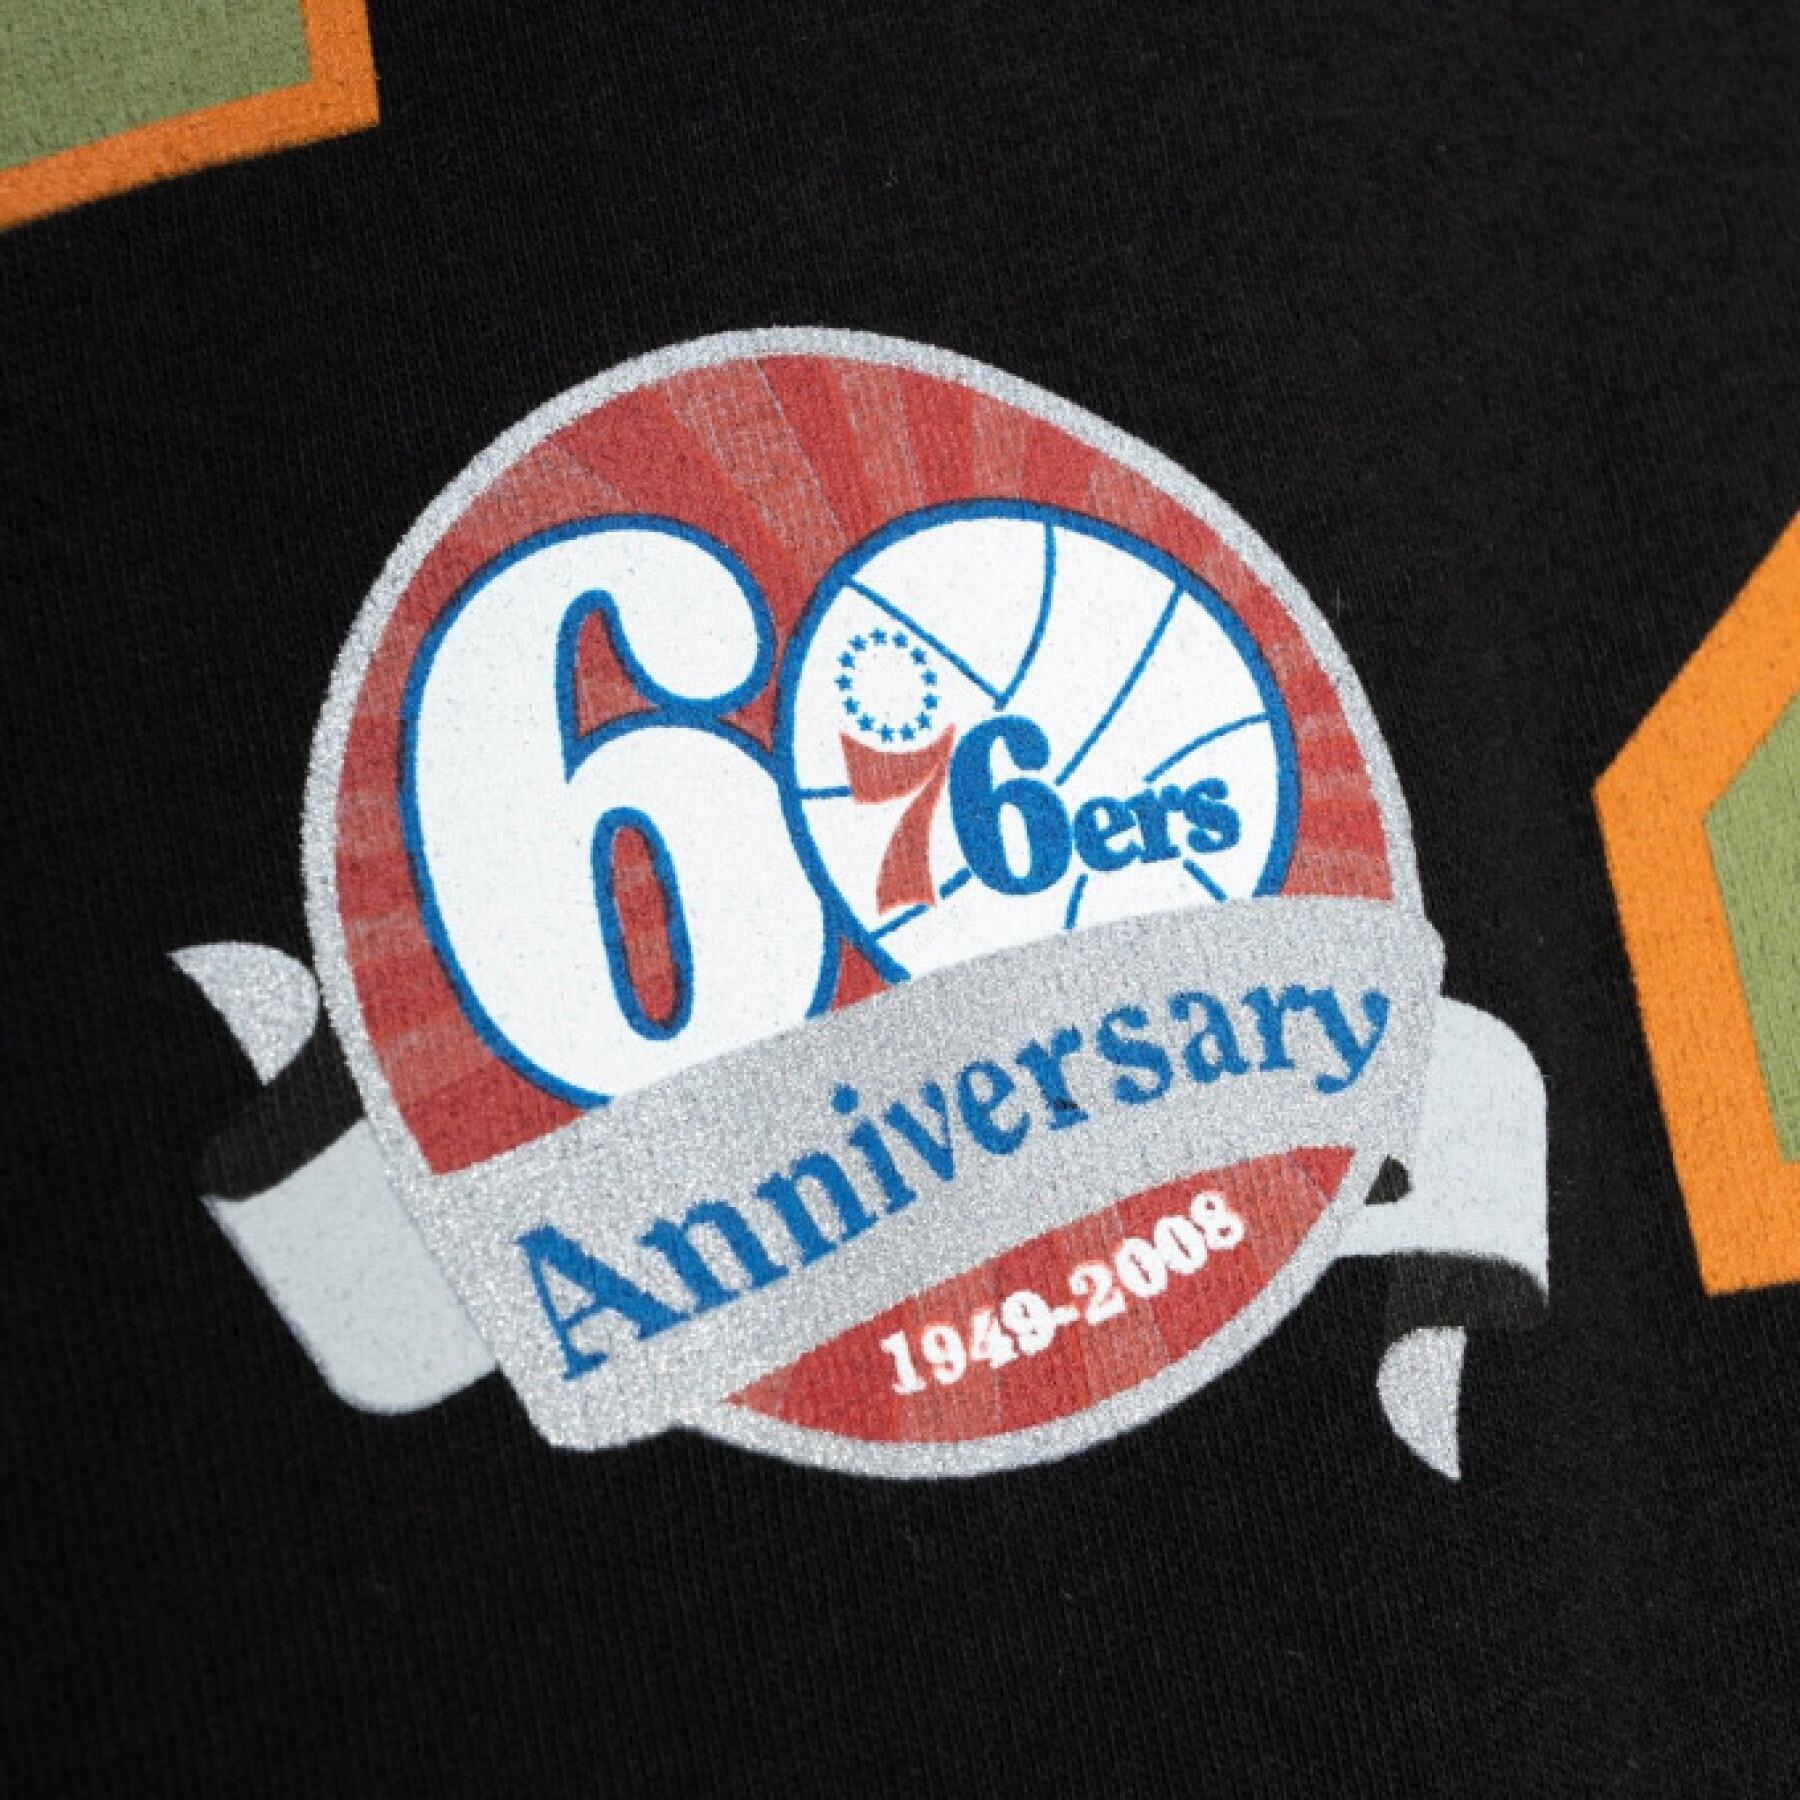 Camiseta Philadelphia 76ers NBA Script N&N 76ers Allen Iverson